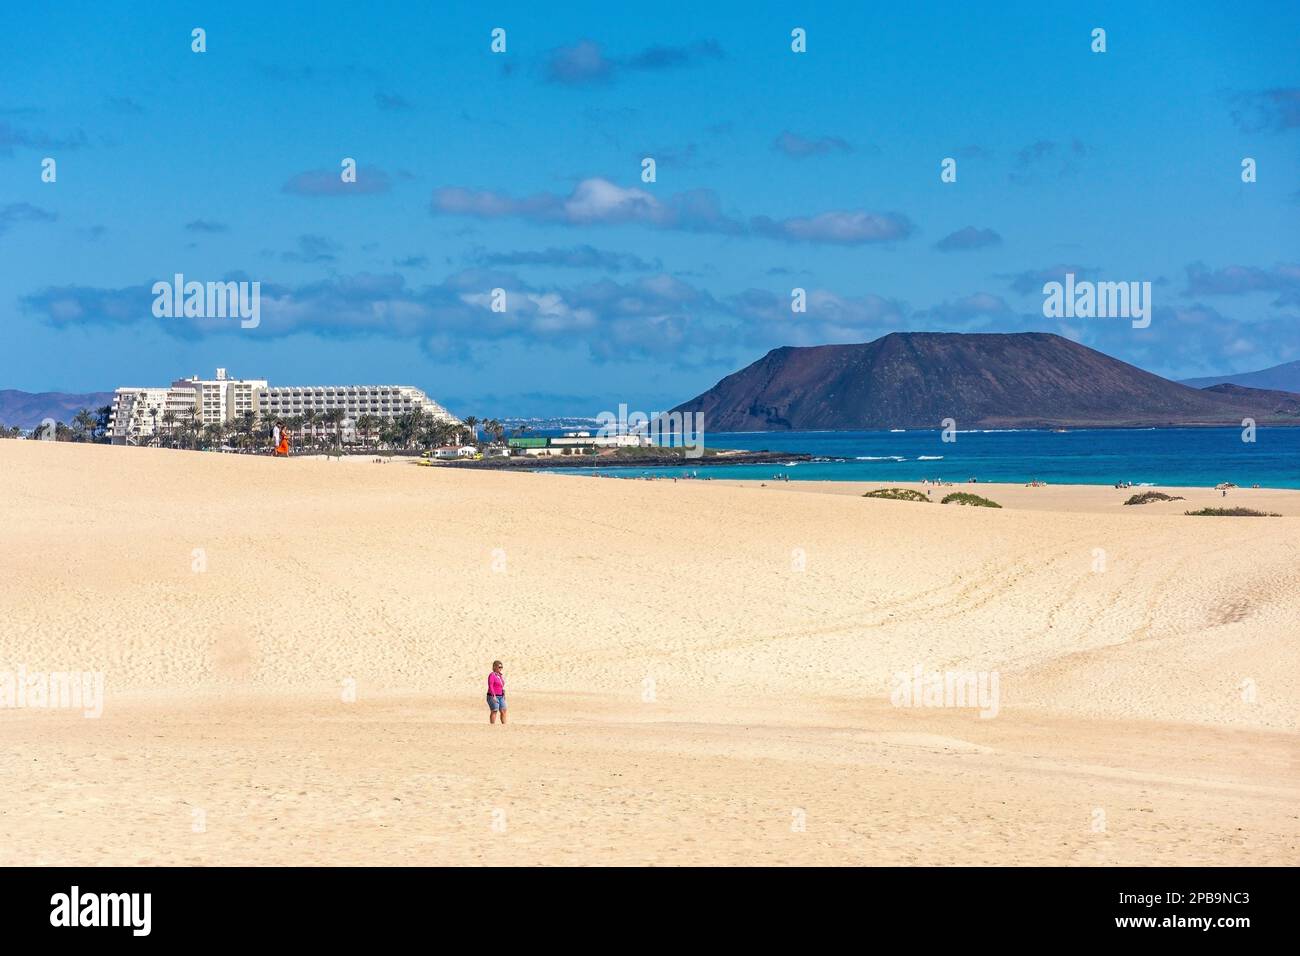 Sand dune landscape and beach, Parque Natural de Corralejo, Corralejo, Fuerteventura, Canary Islands, Kingdom of Spain Stock Photo